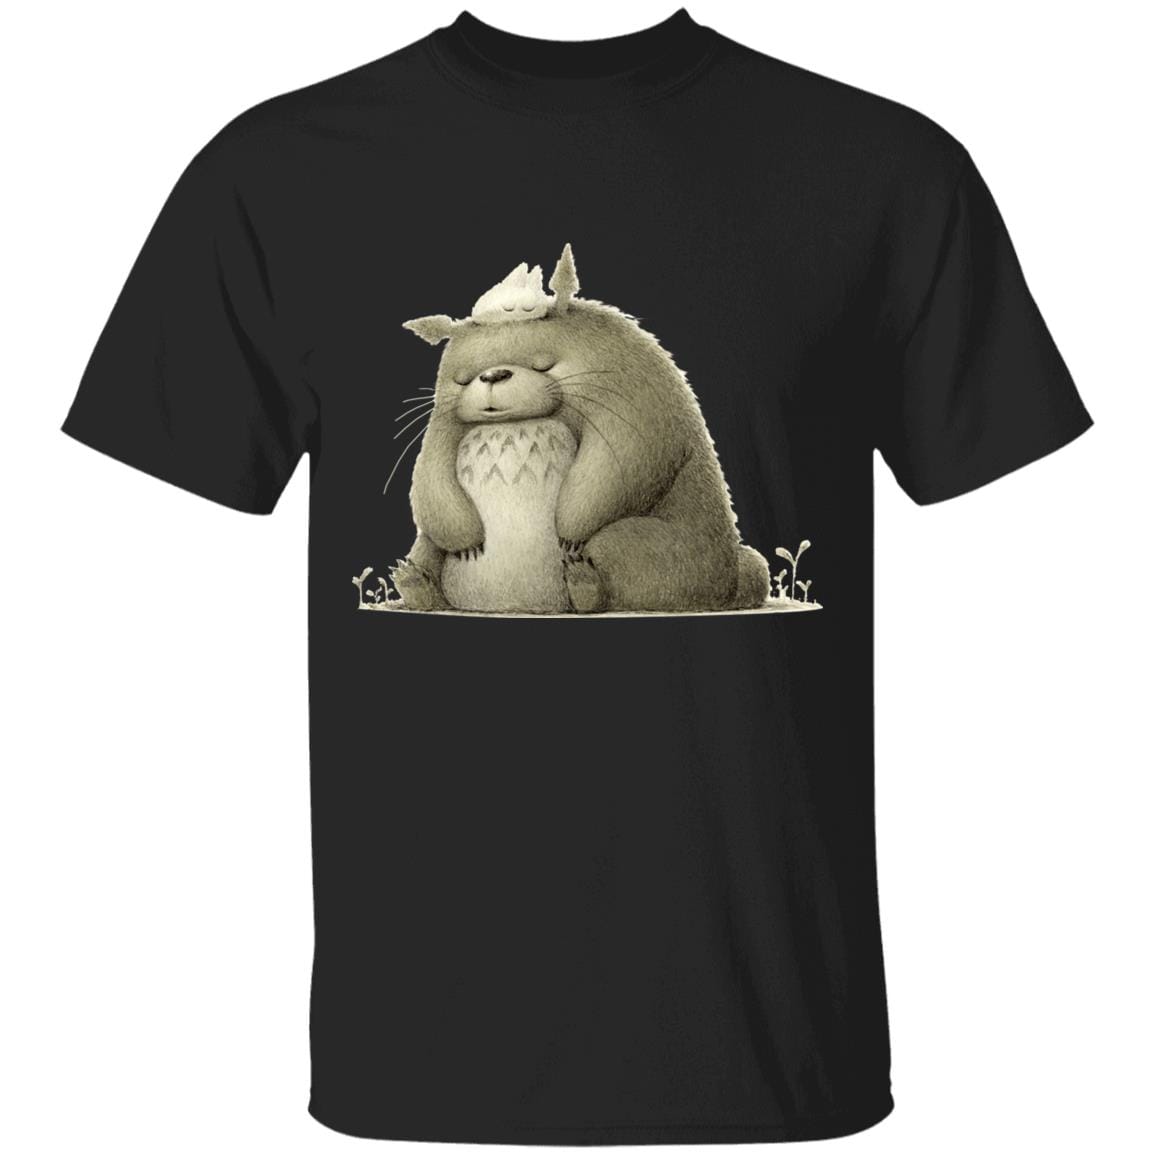 The Fluffy Totoro T Shirt